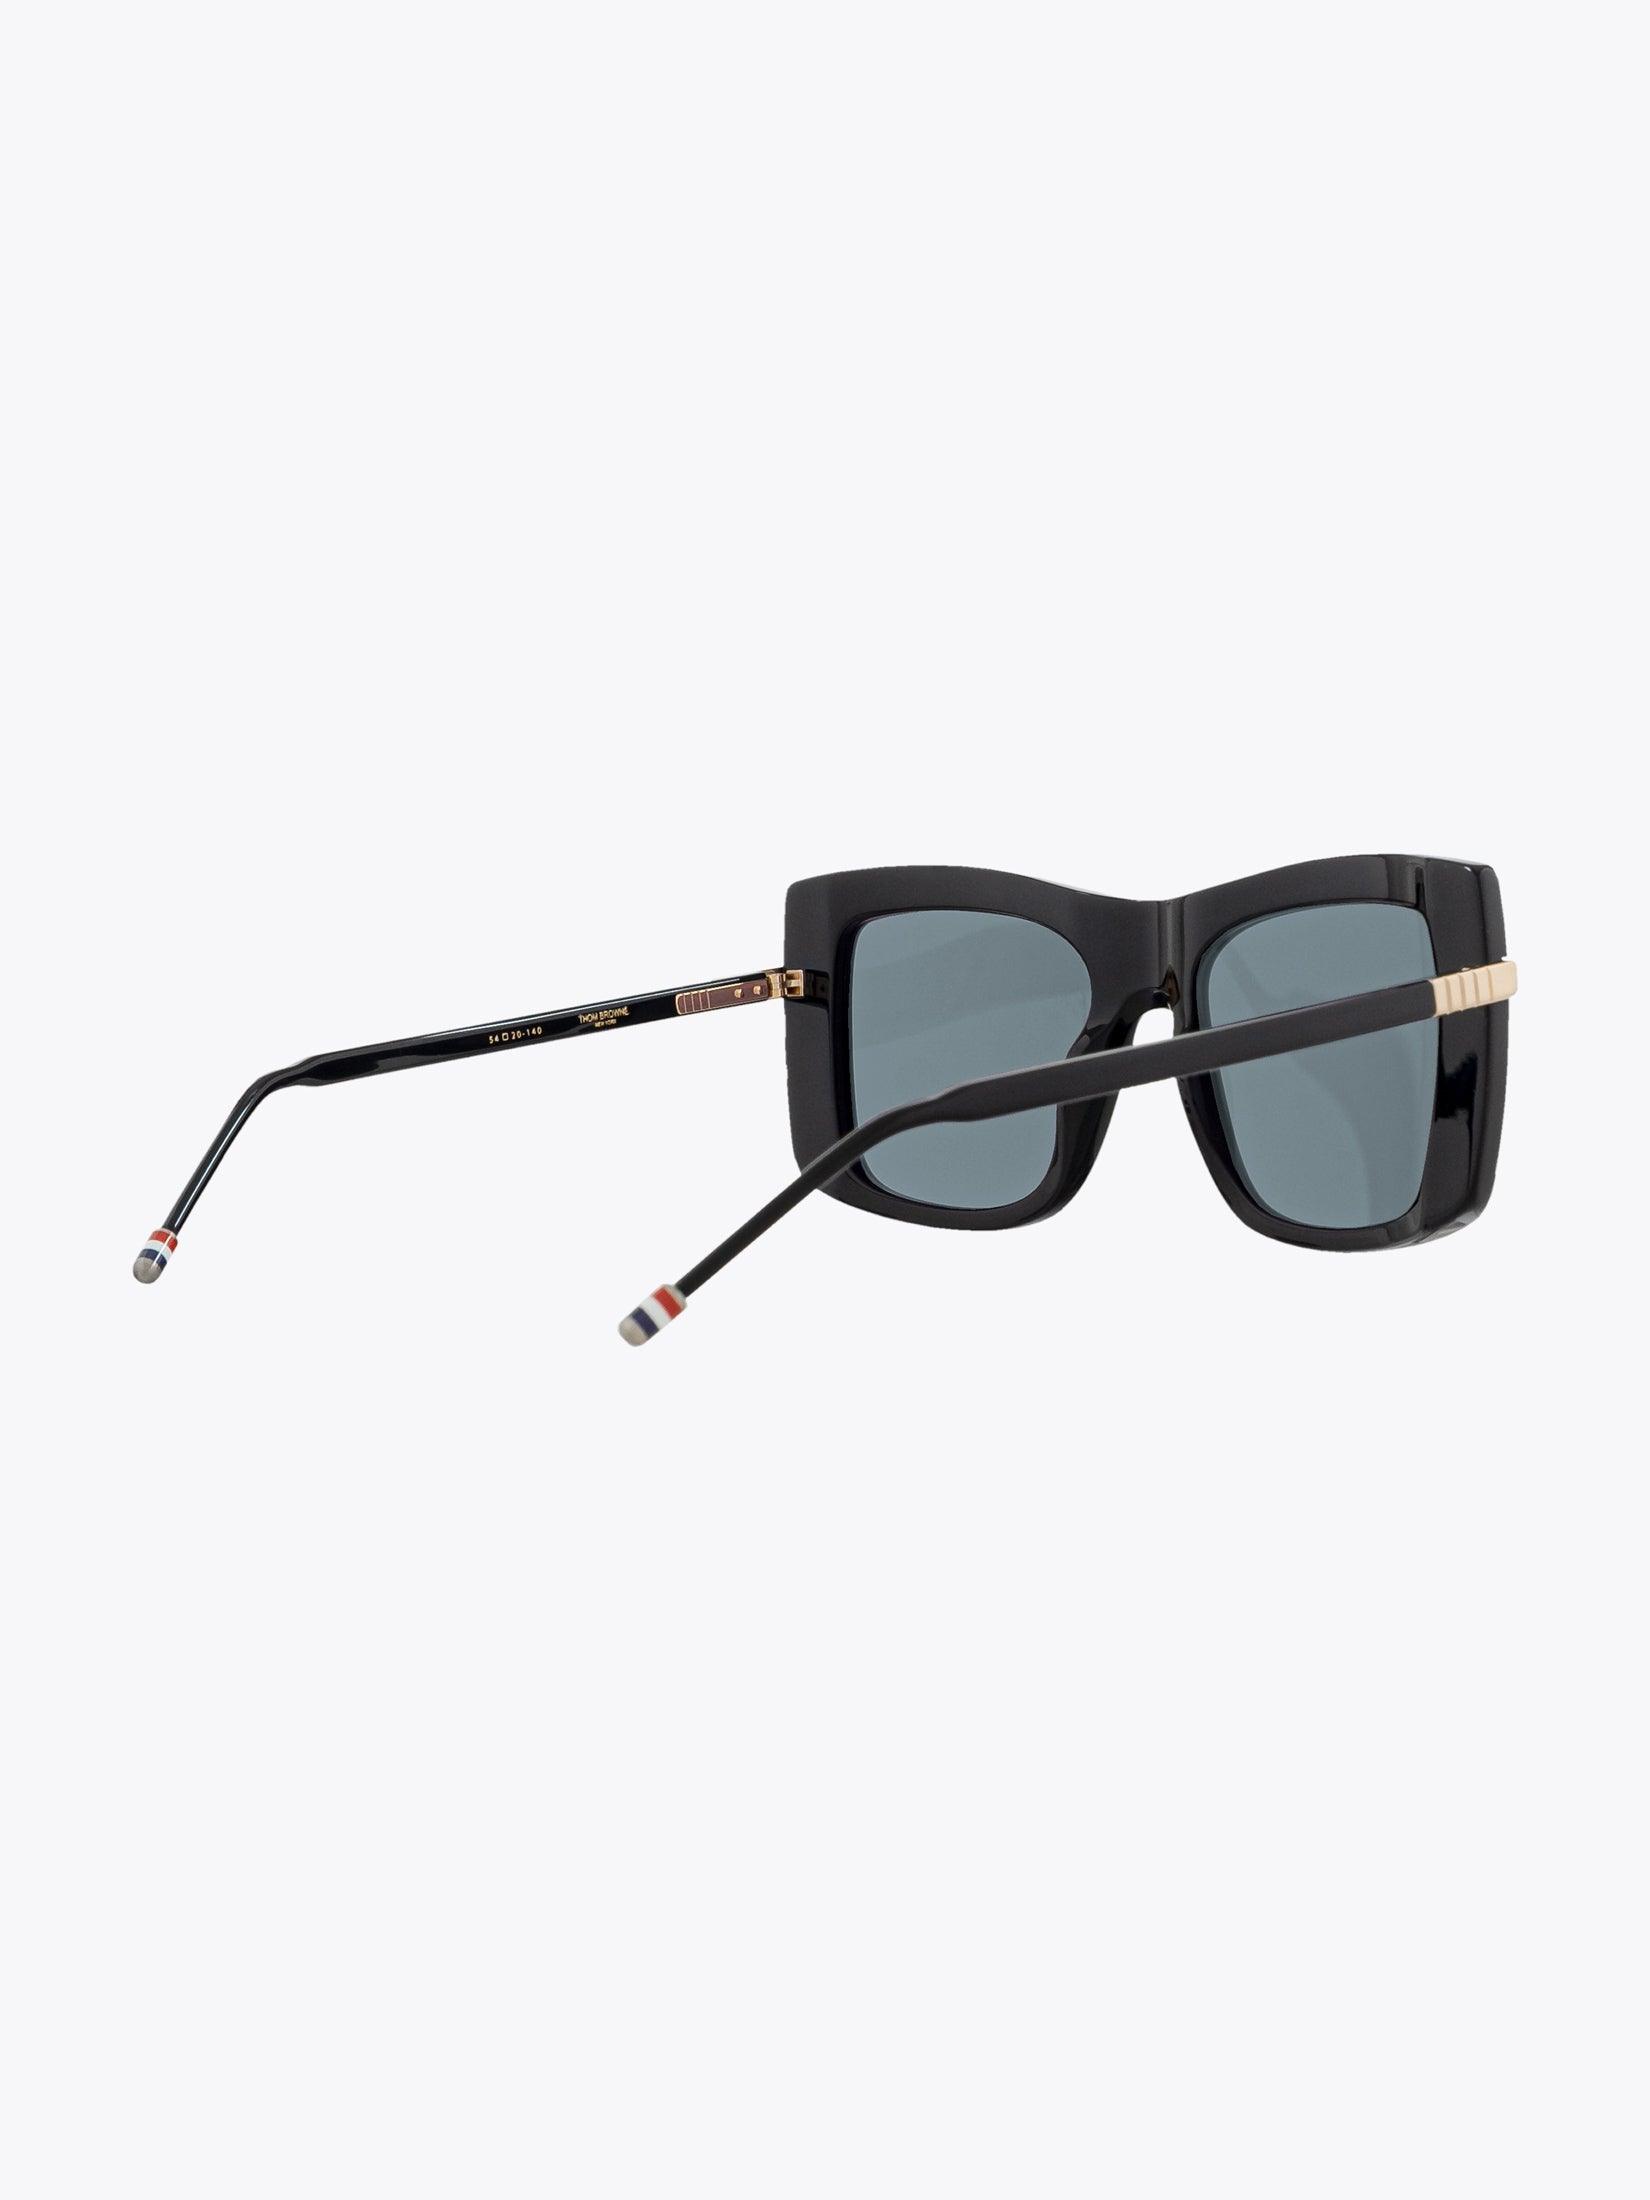 Thom Browne TB-419 Black Sunglasses